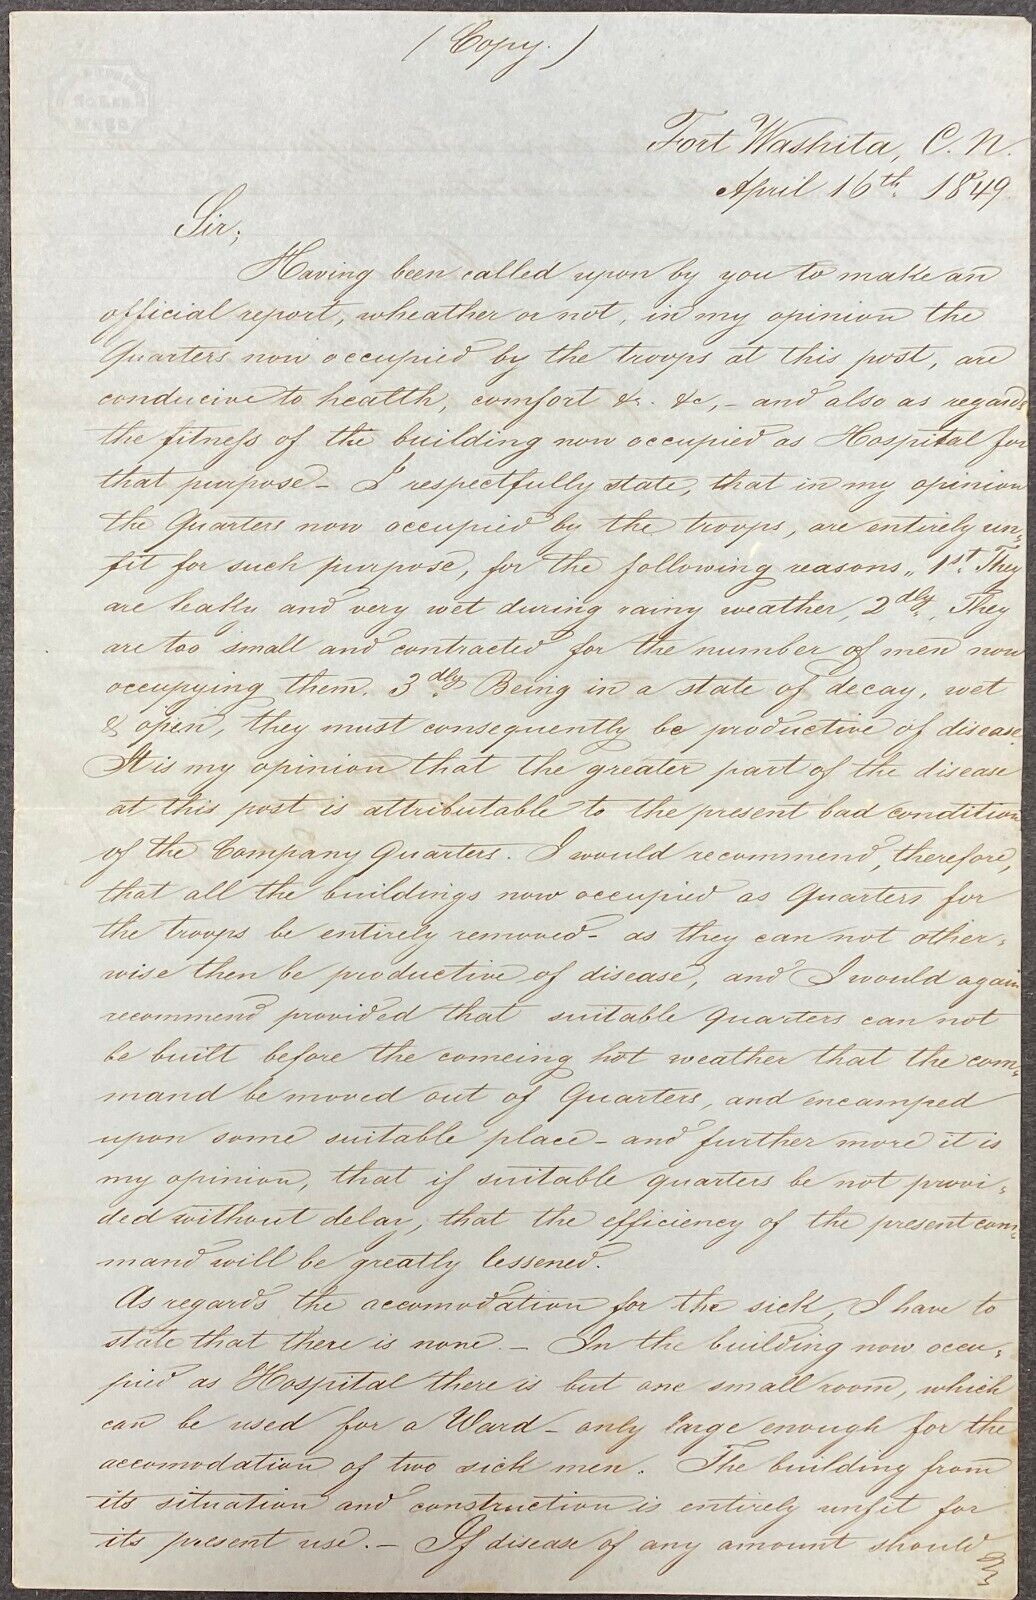 Period Official Manuscript Copy – Fort Washita, Chickasaw Nation